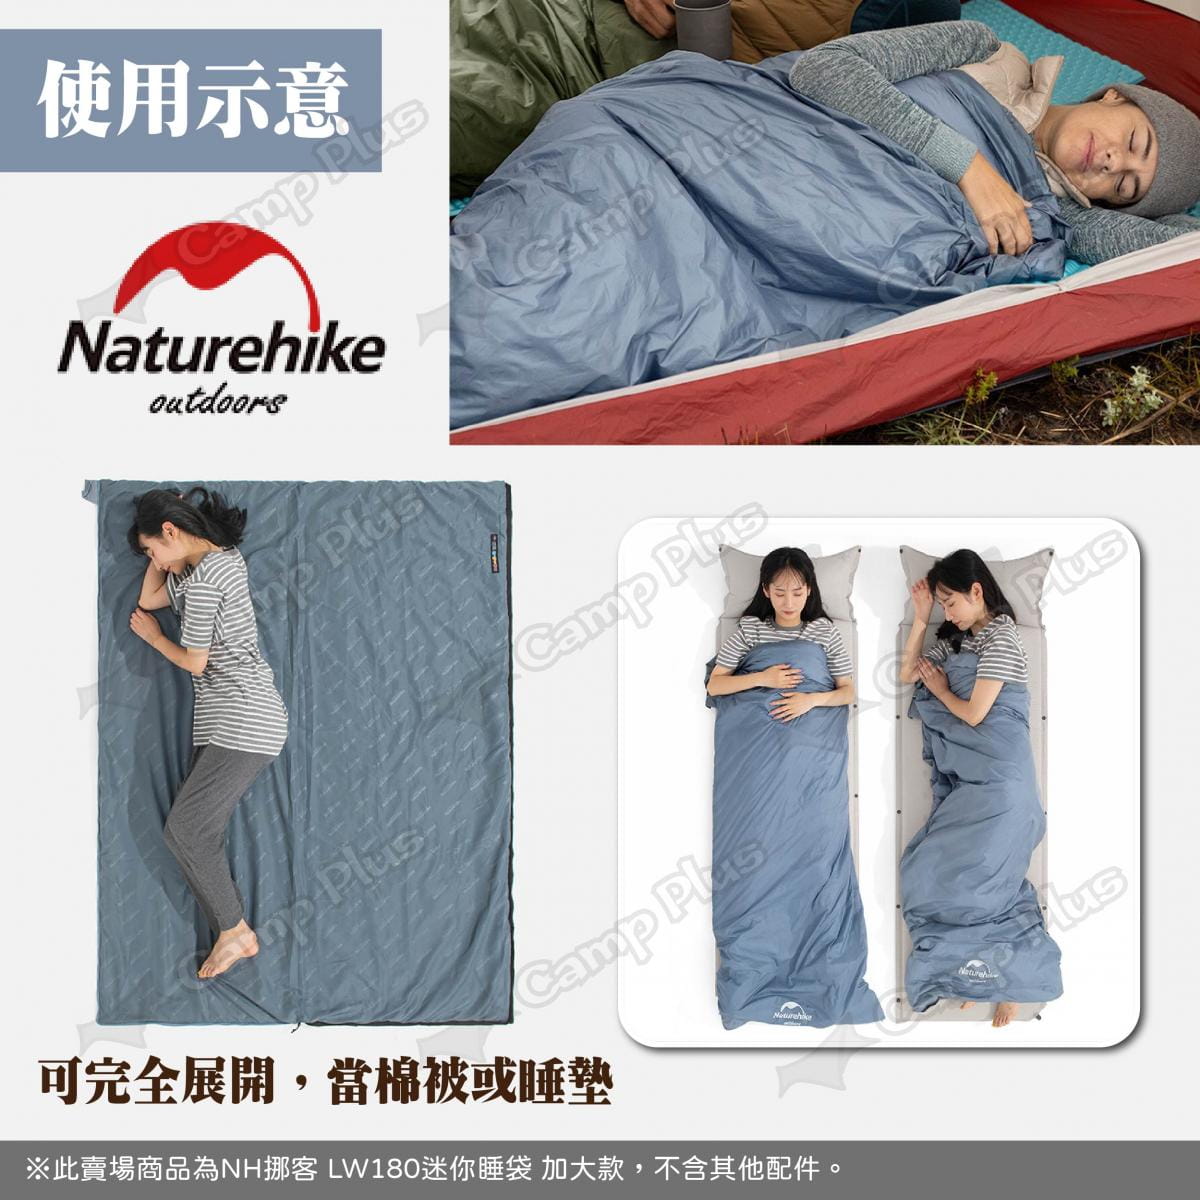 【NatureHike】【Naturehike 挪客】LW180迷你睡袋 加大款XL 悠遊戶外 5